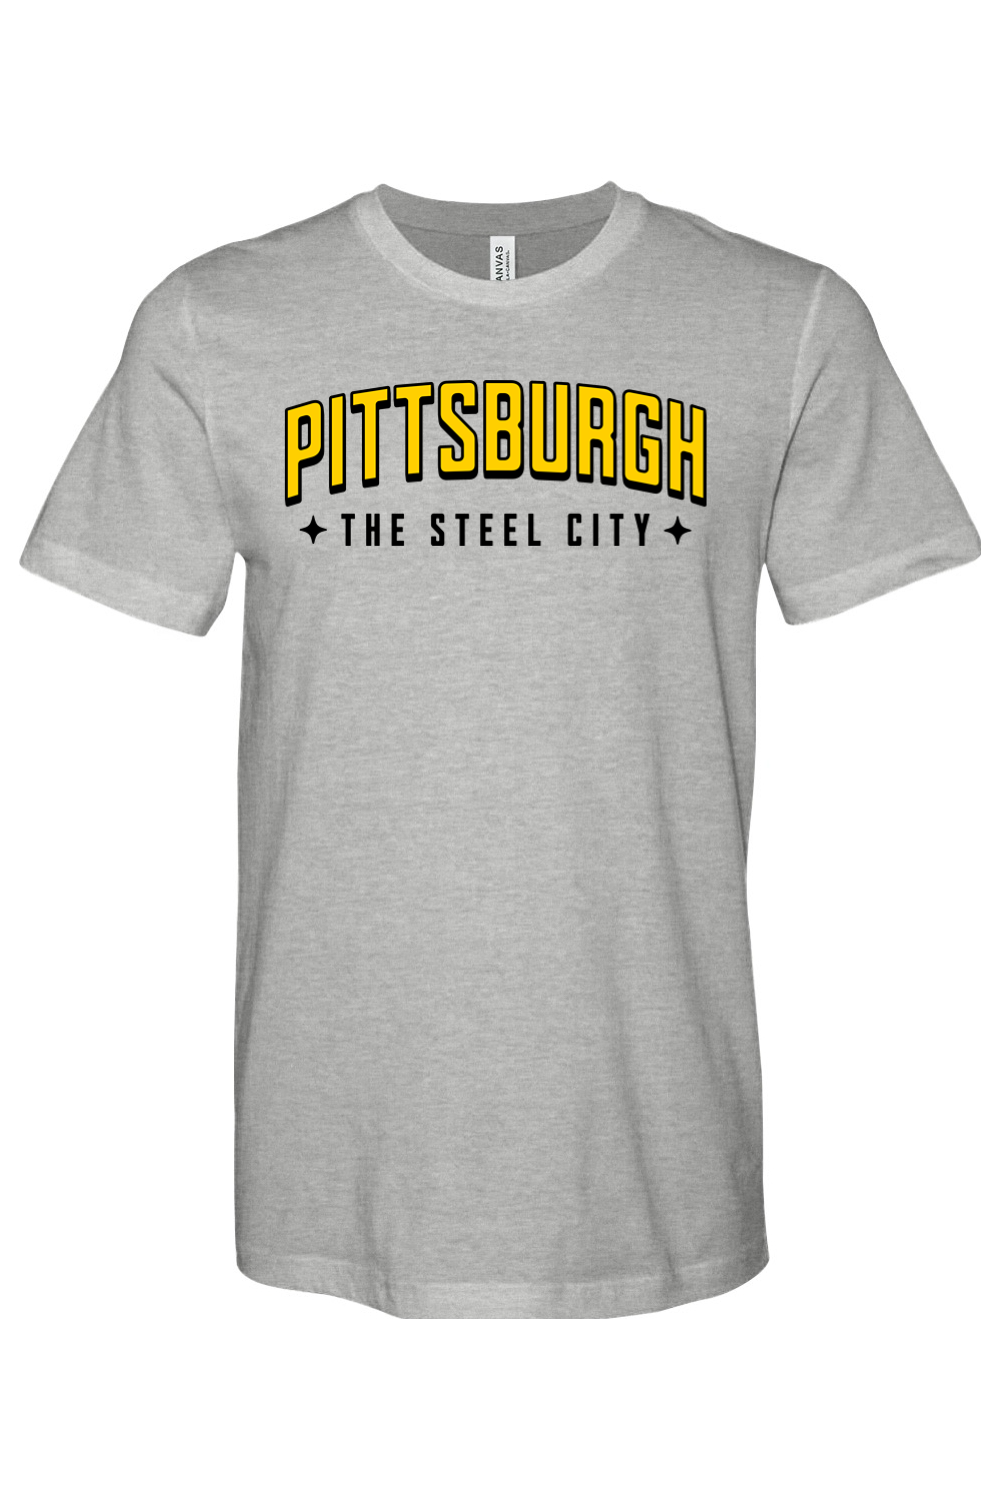 Pittsburgh - The Steel City - Yinzylvania